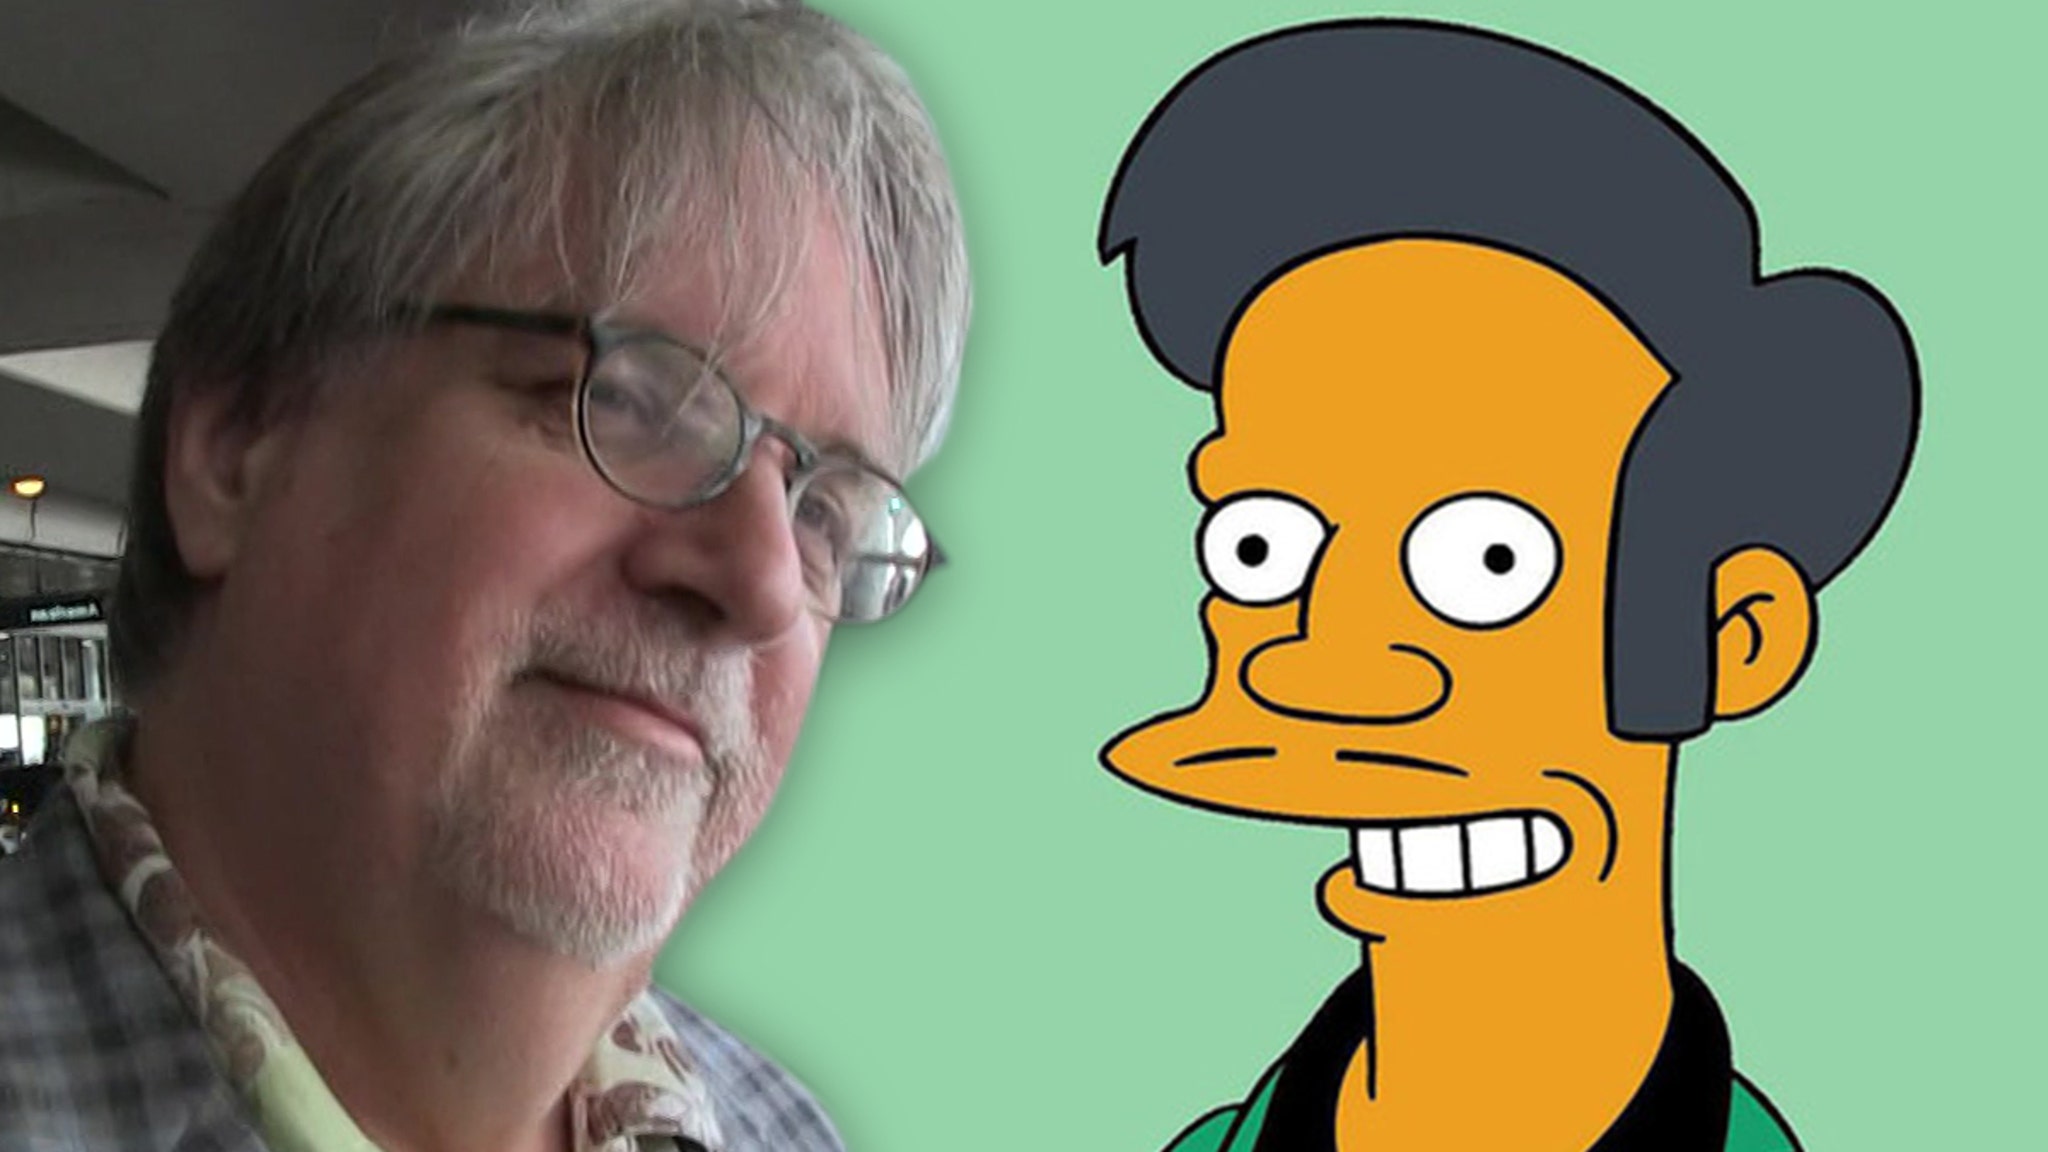 The creator of ‘Simpsons’ Matt Groening says he is proud of Apu’s character